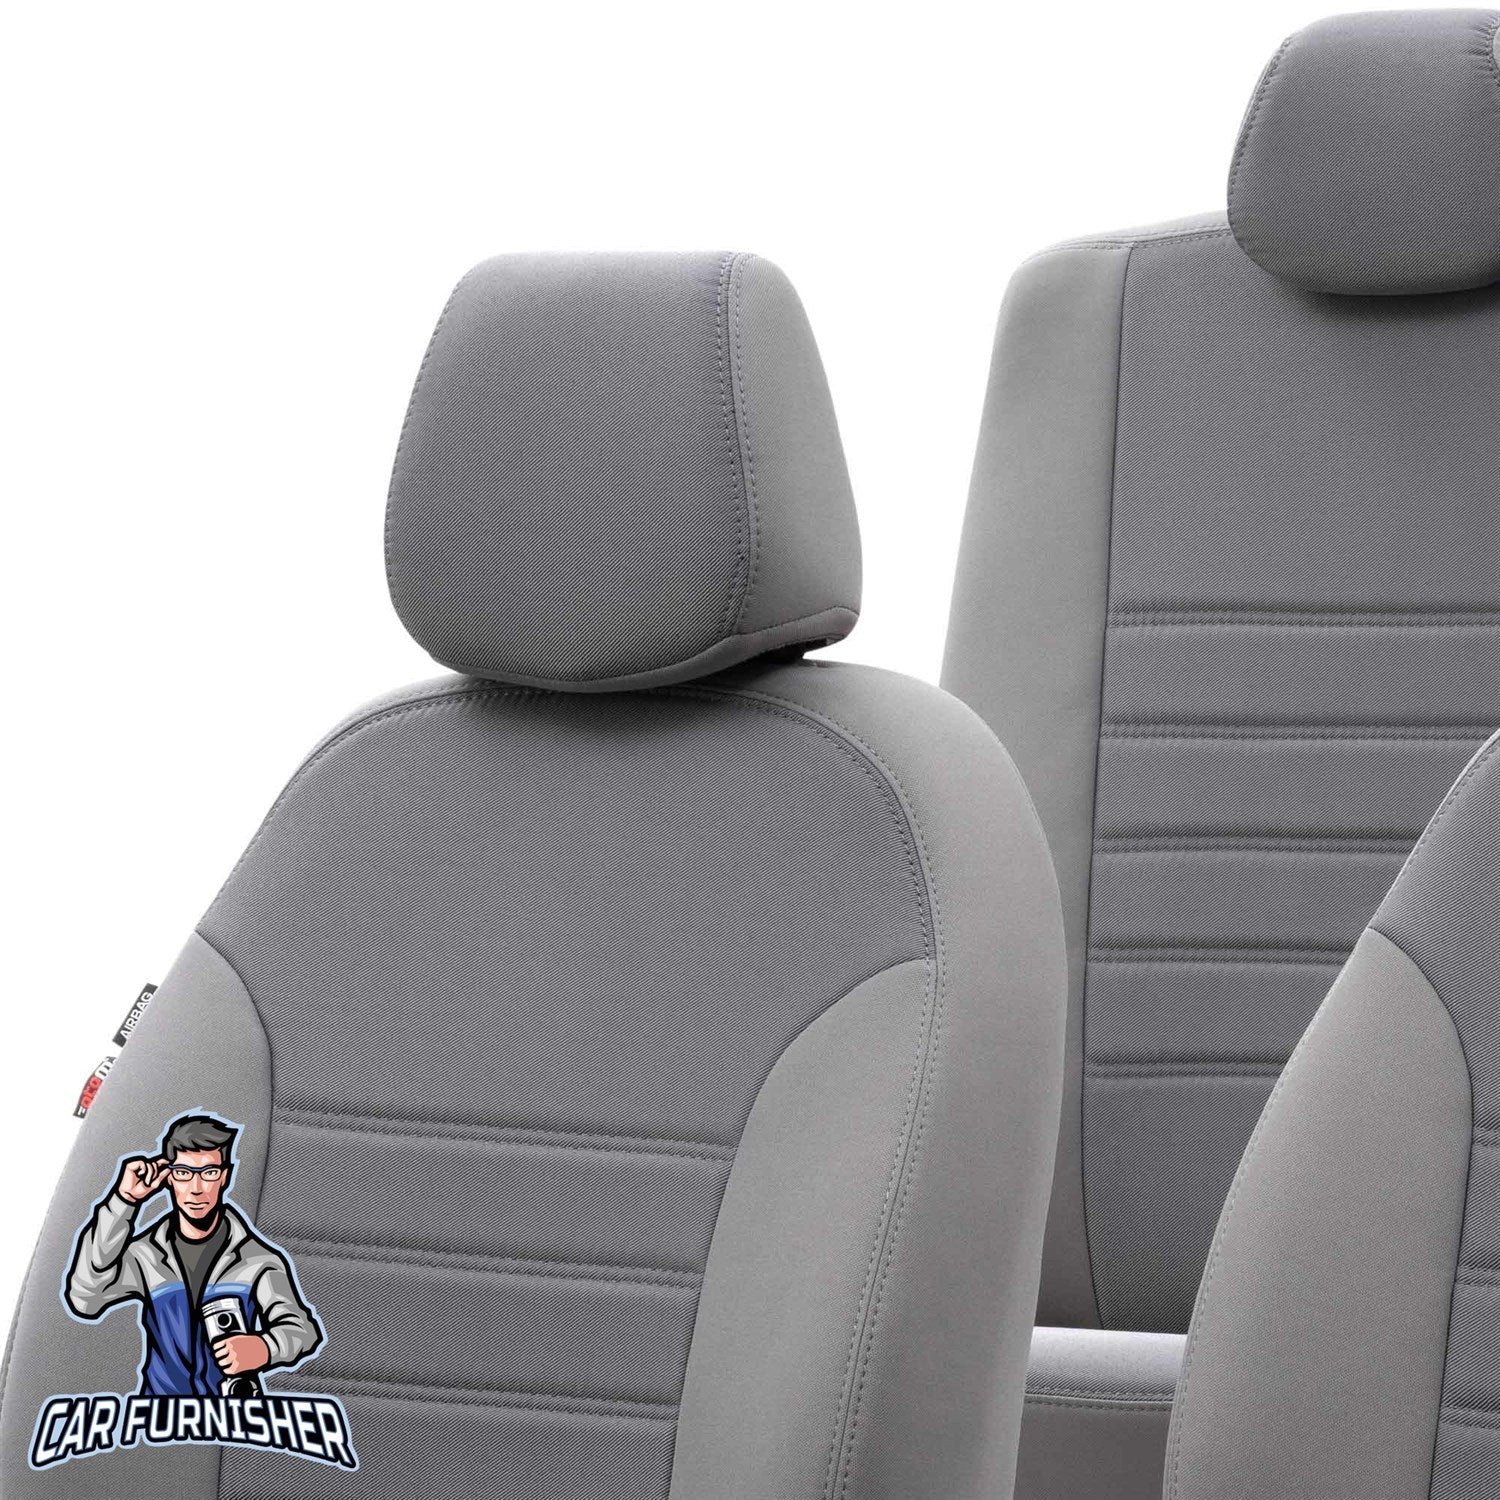 Skoda Scala Seat Covers Original Jacquard Design Gray Jacquard Fabric